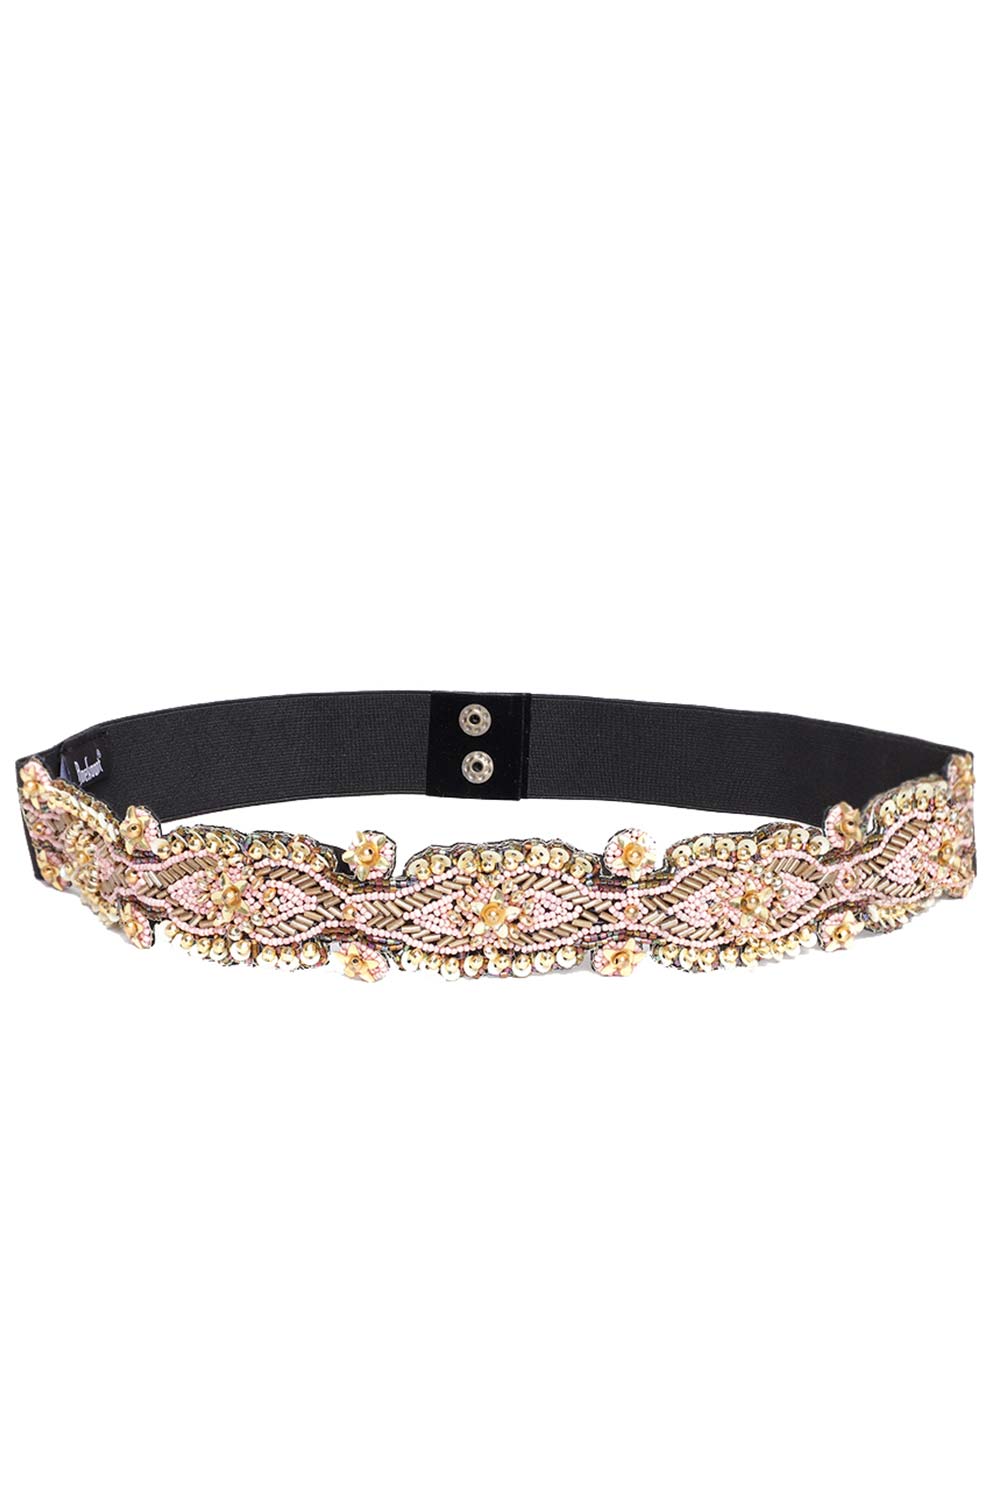 Buy Ogee Bead Work Saree Waist Belt in Pink & Gold Online - One Minute Saree